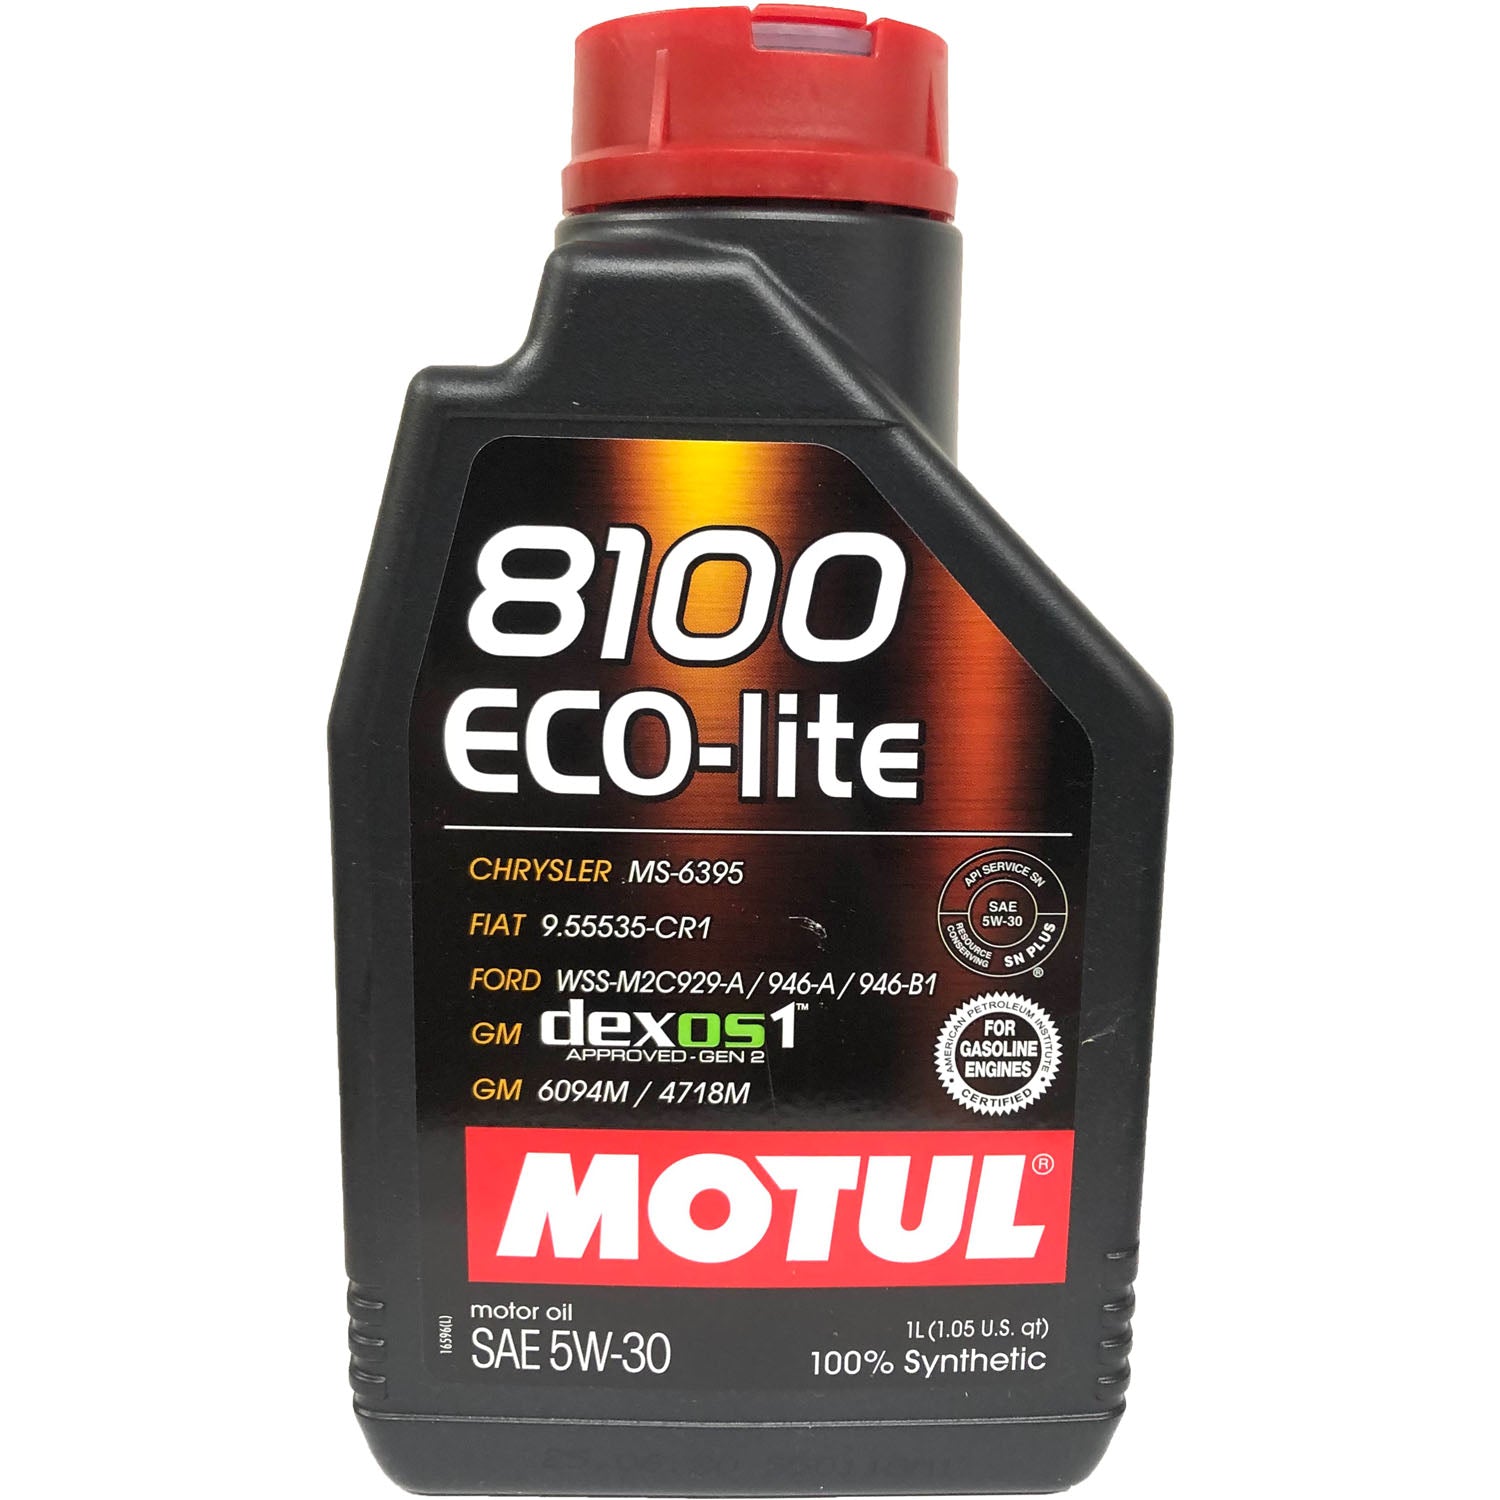 Motul 8100 Eco-Lite Synthetic Motor Oil 5W30 - 1 Liter